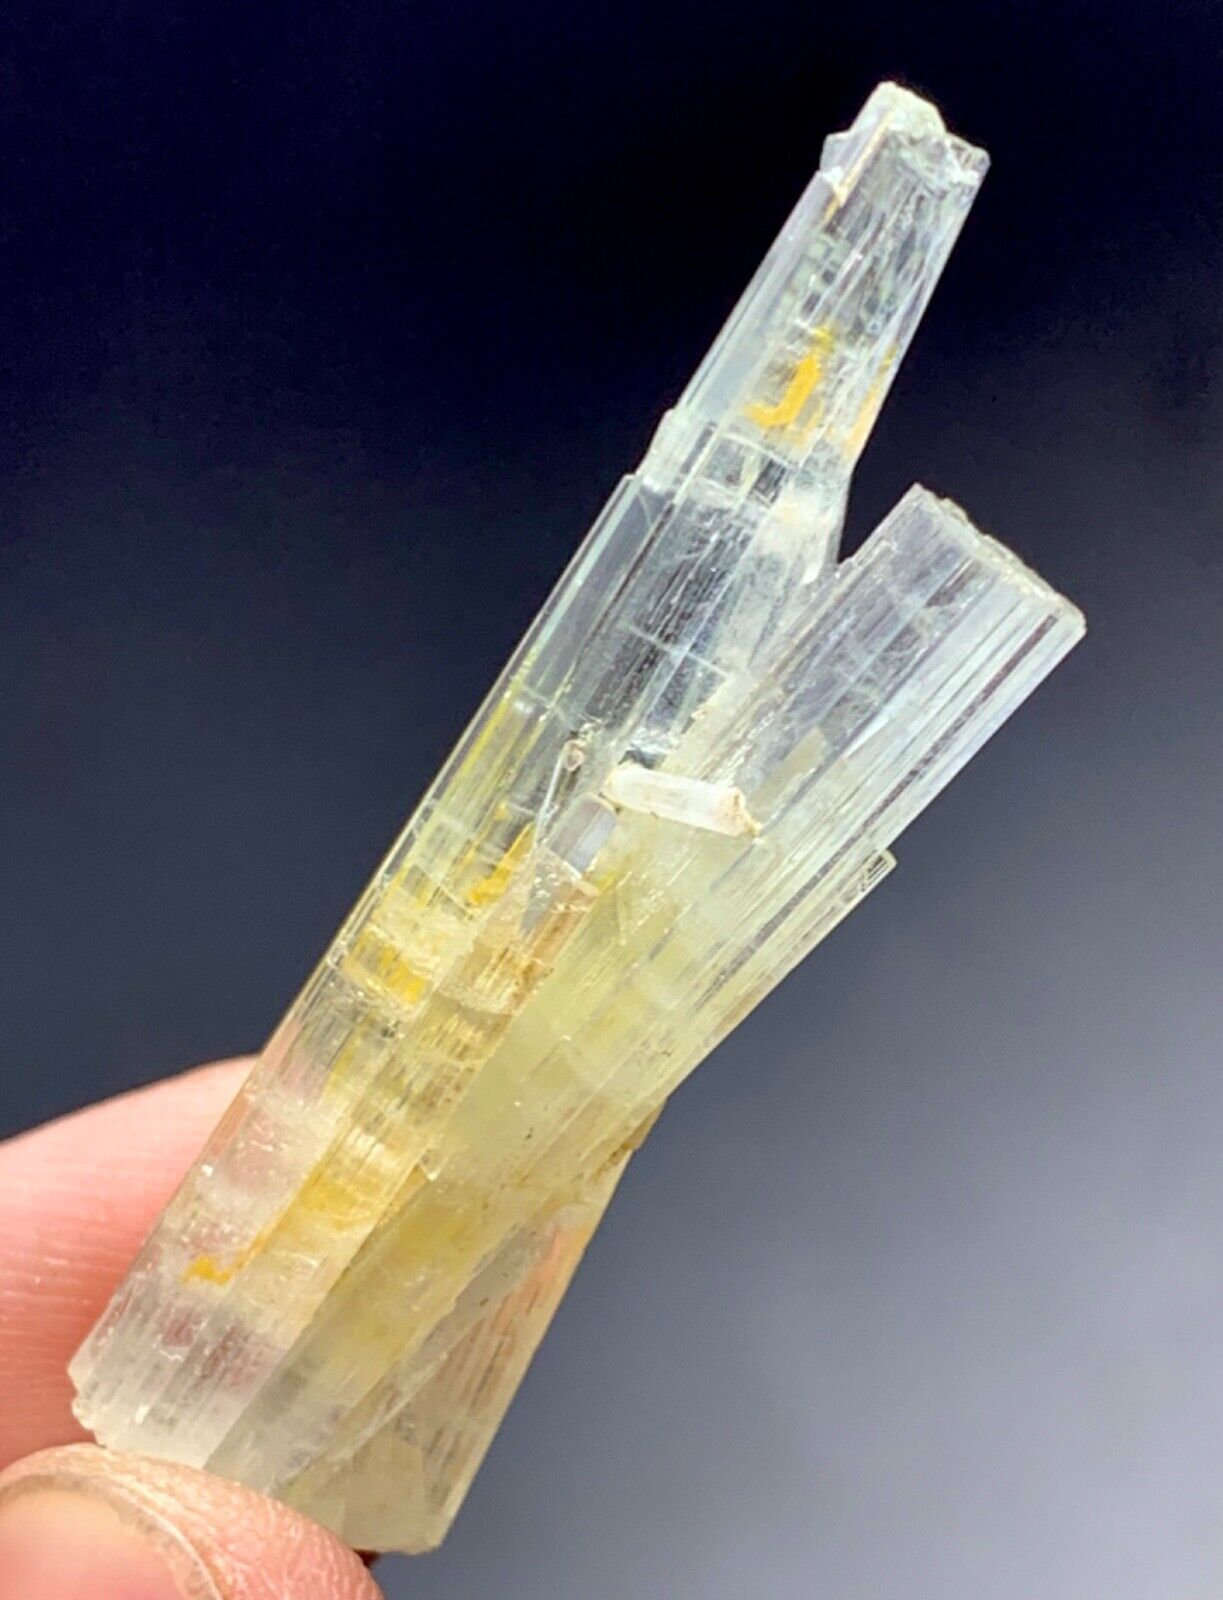 21 Carat Aquamarine Crystal Specimen from Pakistan